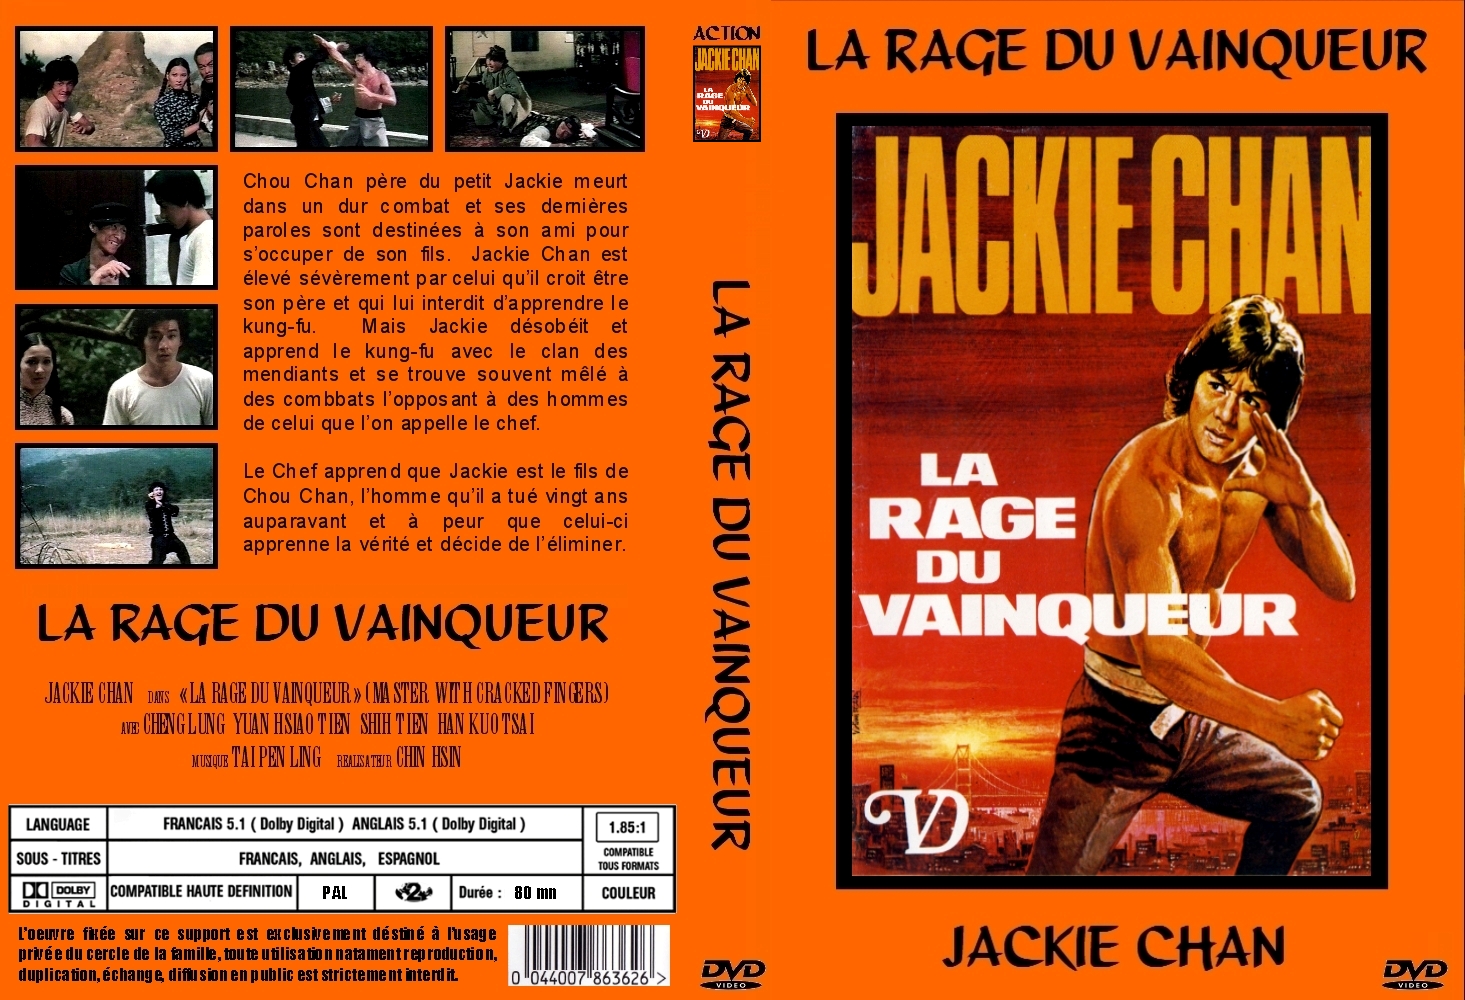 Jaquette DVD La rage du vainqueur custom v2